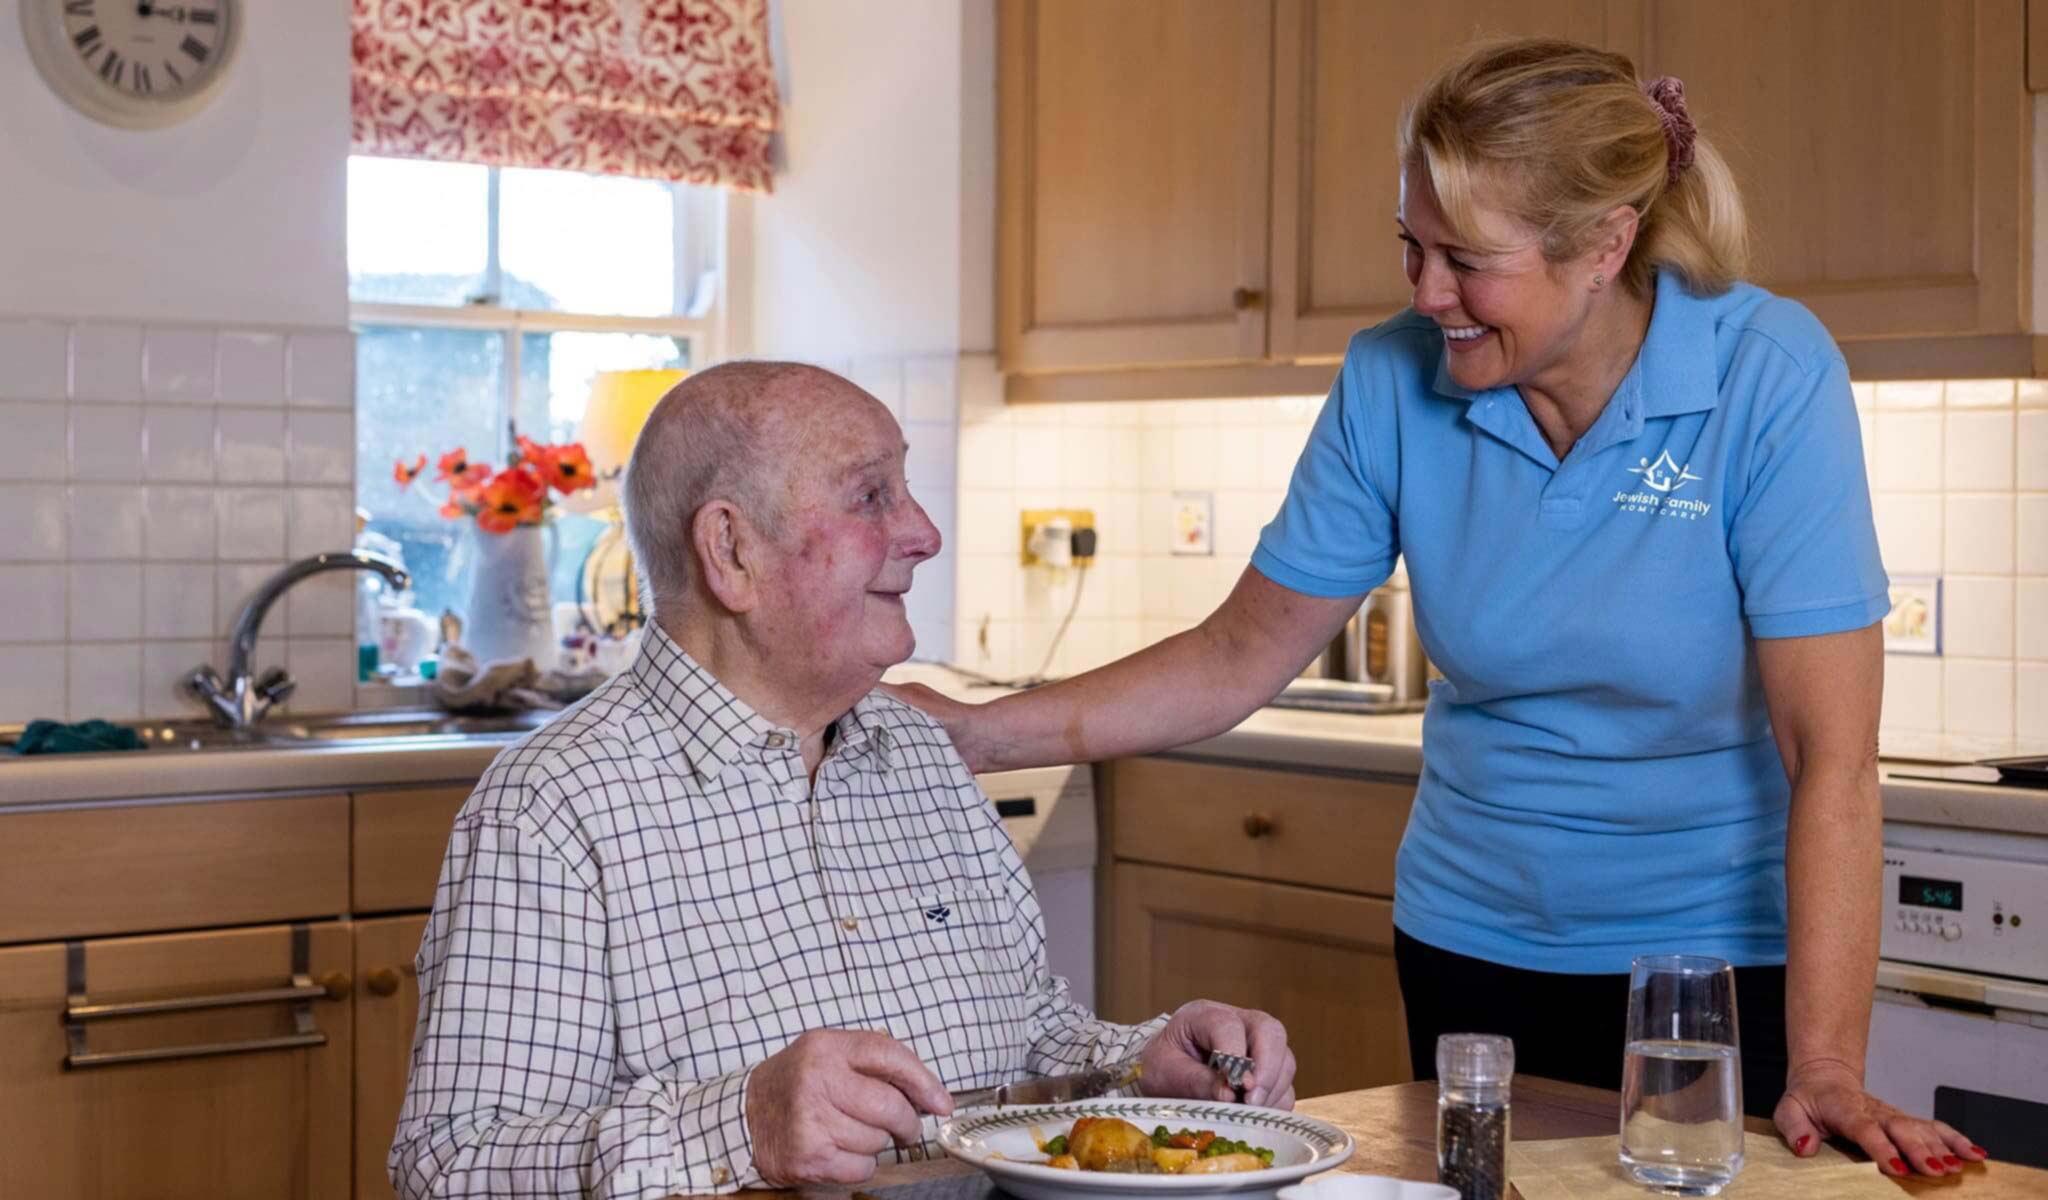 Caregiver serving senior client his meal